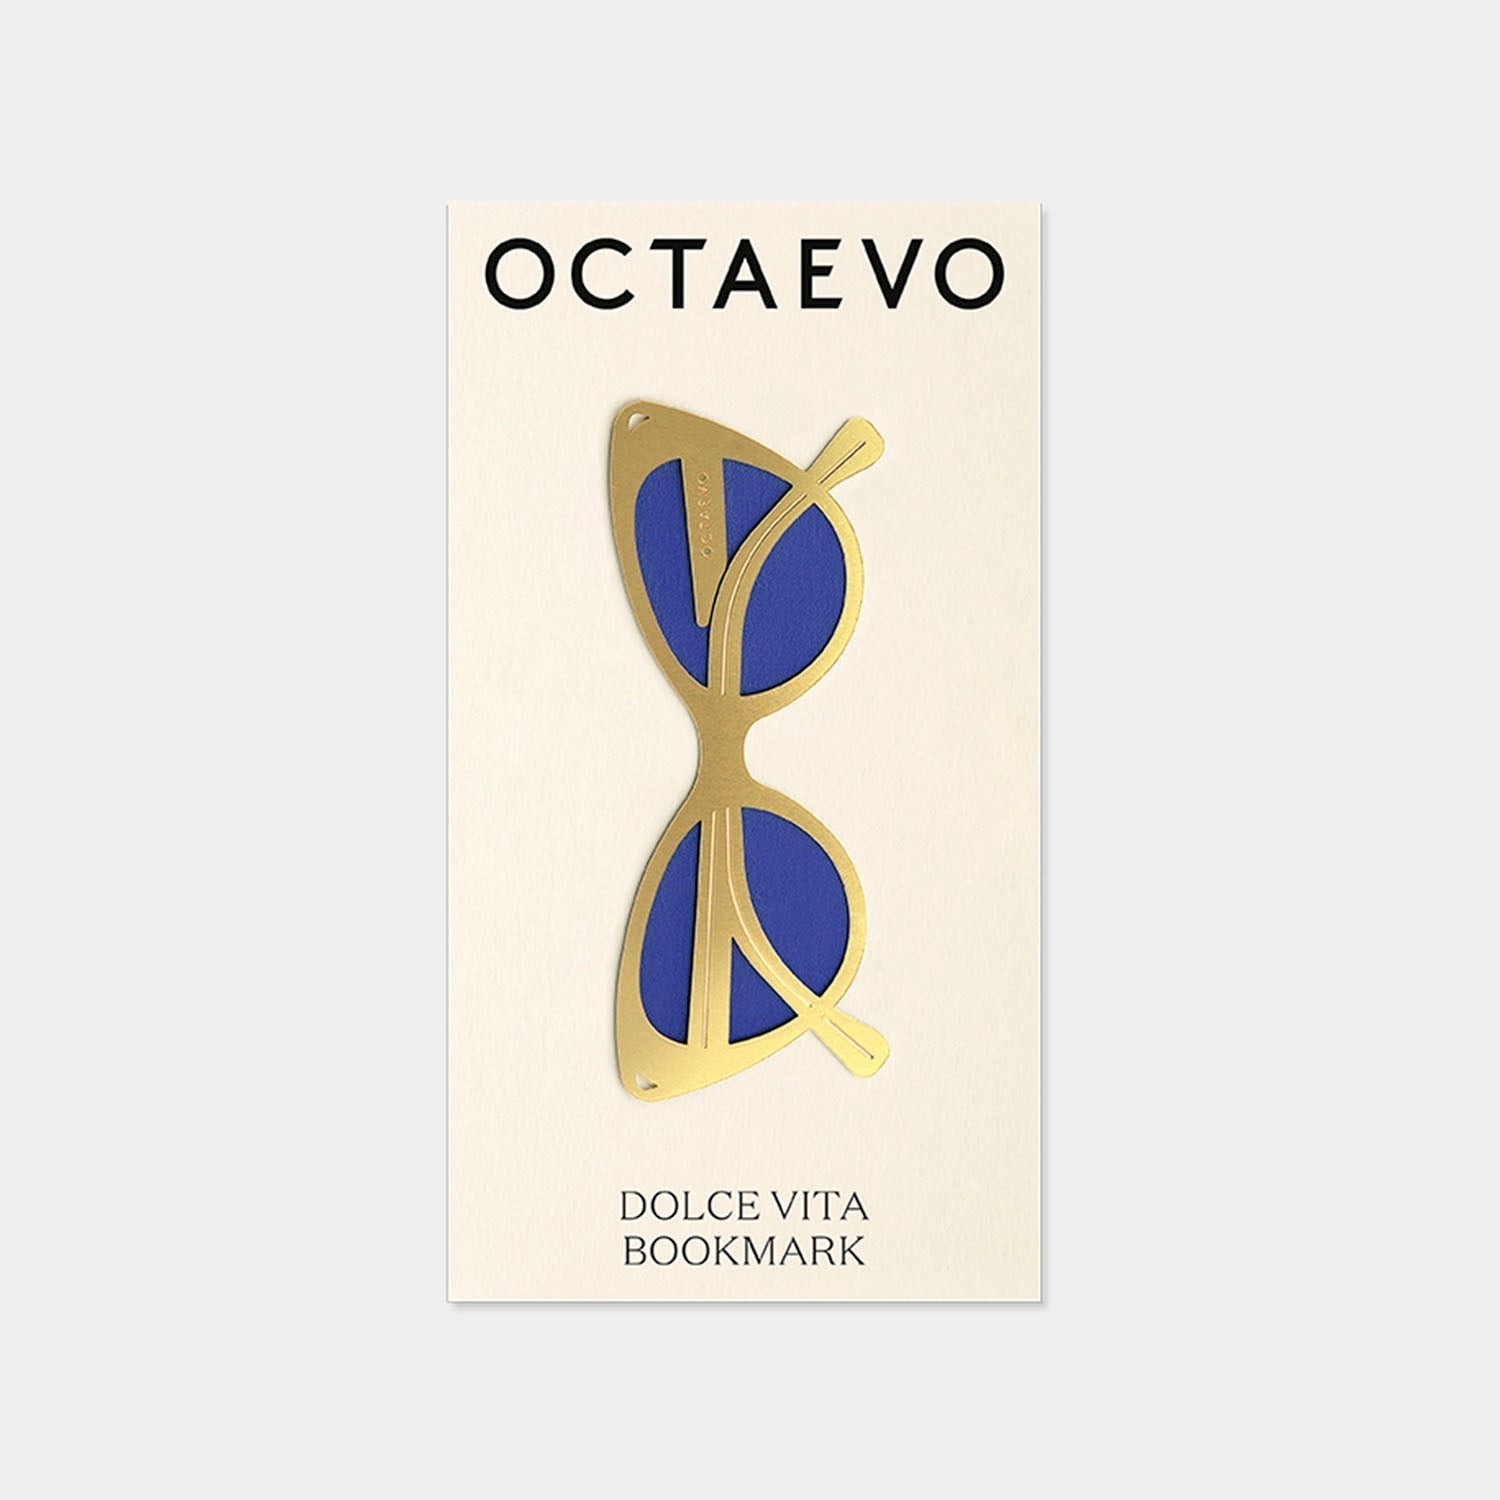 Bookmark Dolce Vita in gold by OCTAEVO